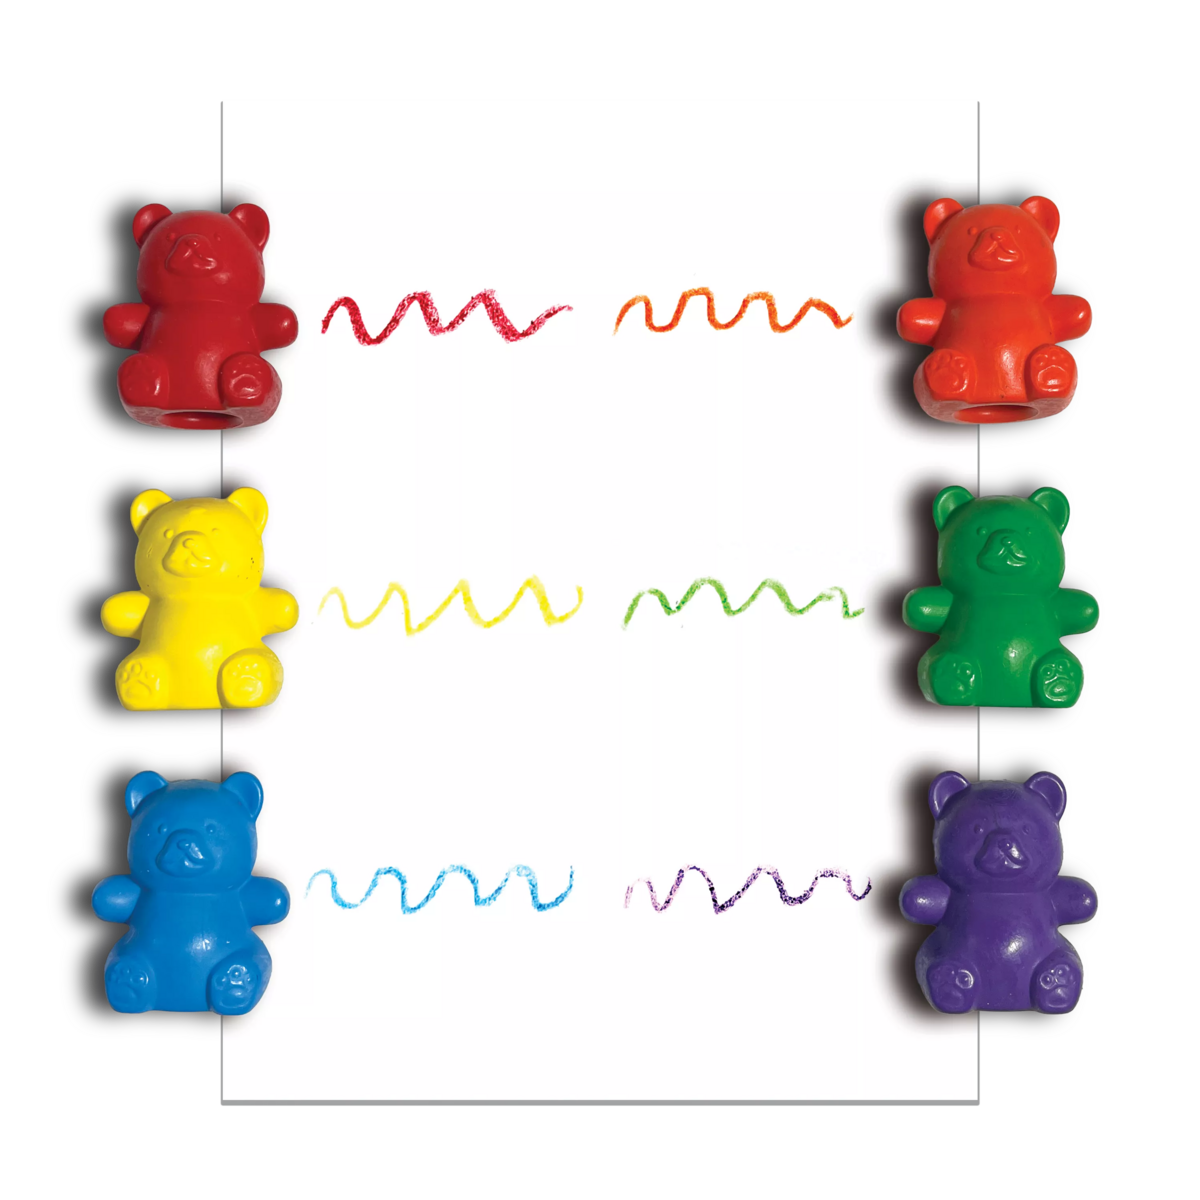 OOLY Happy Triangles Jumbo Crayons - Set of 12 – BelovedKid